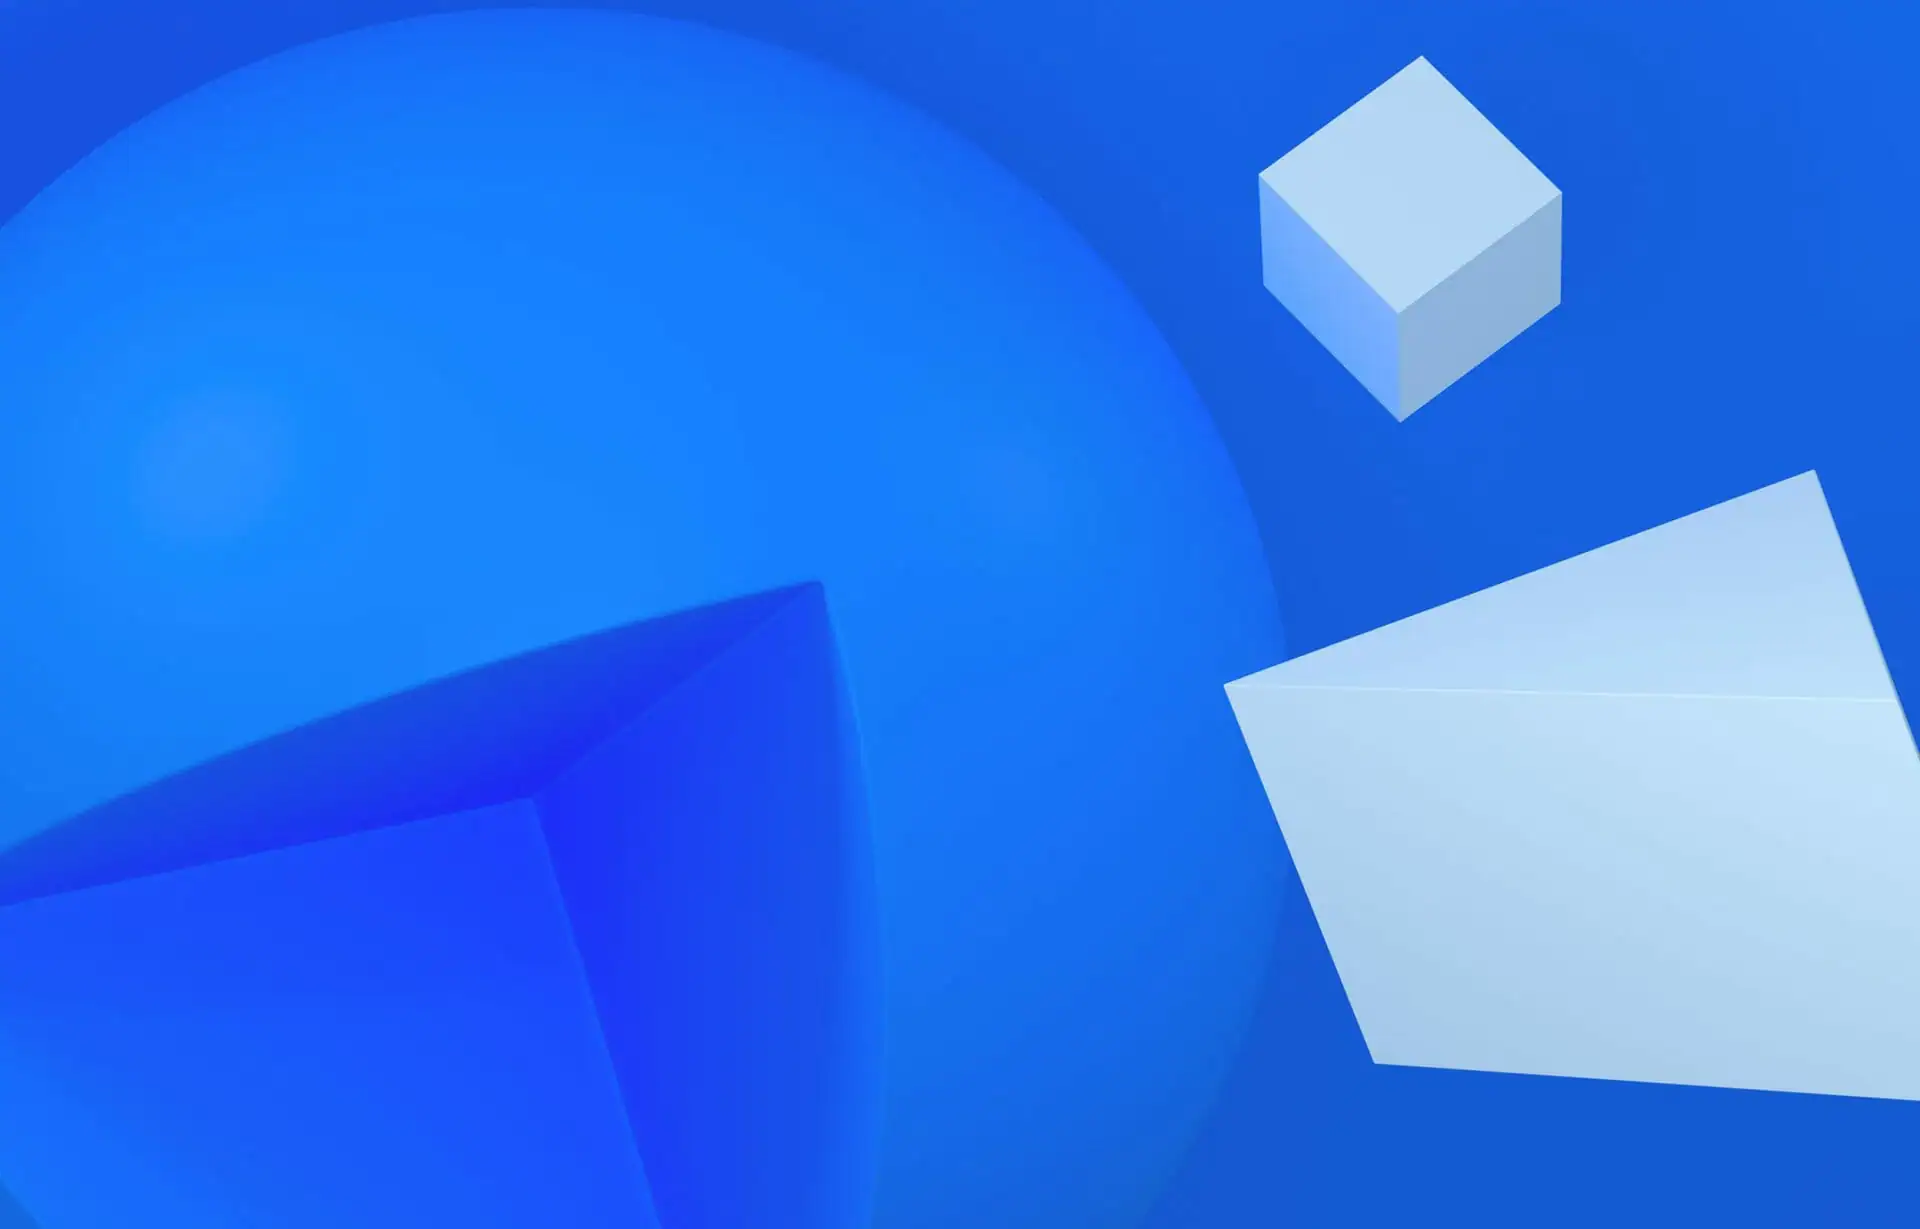 geometric 3d shapes scene blue